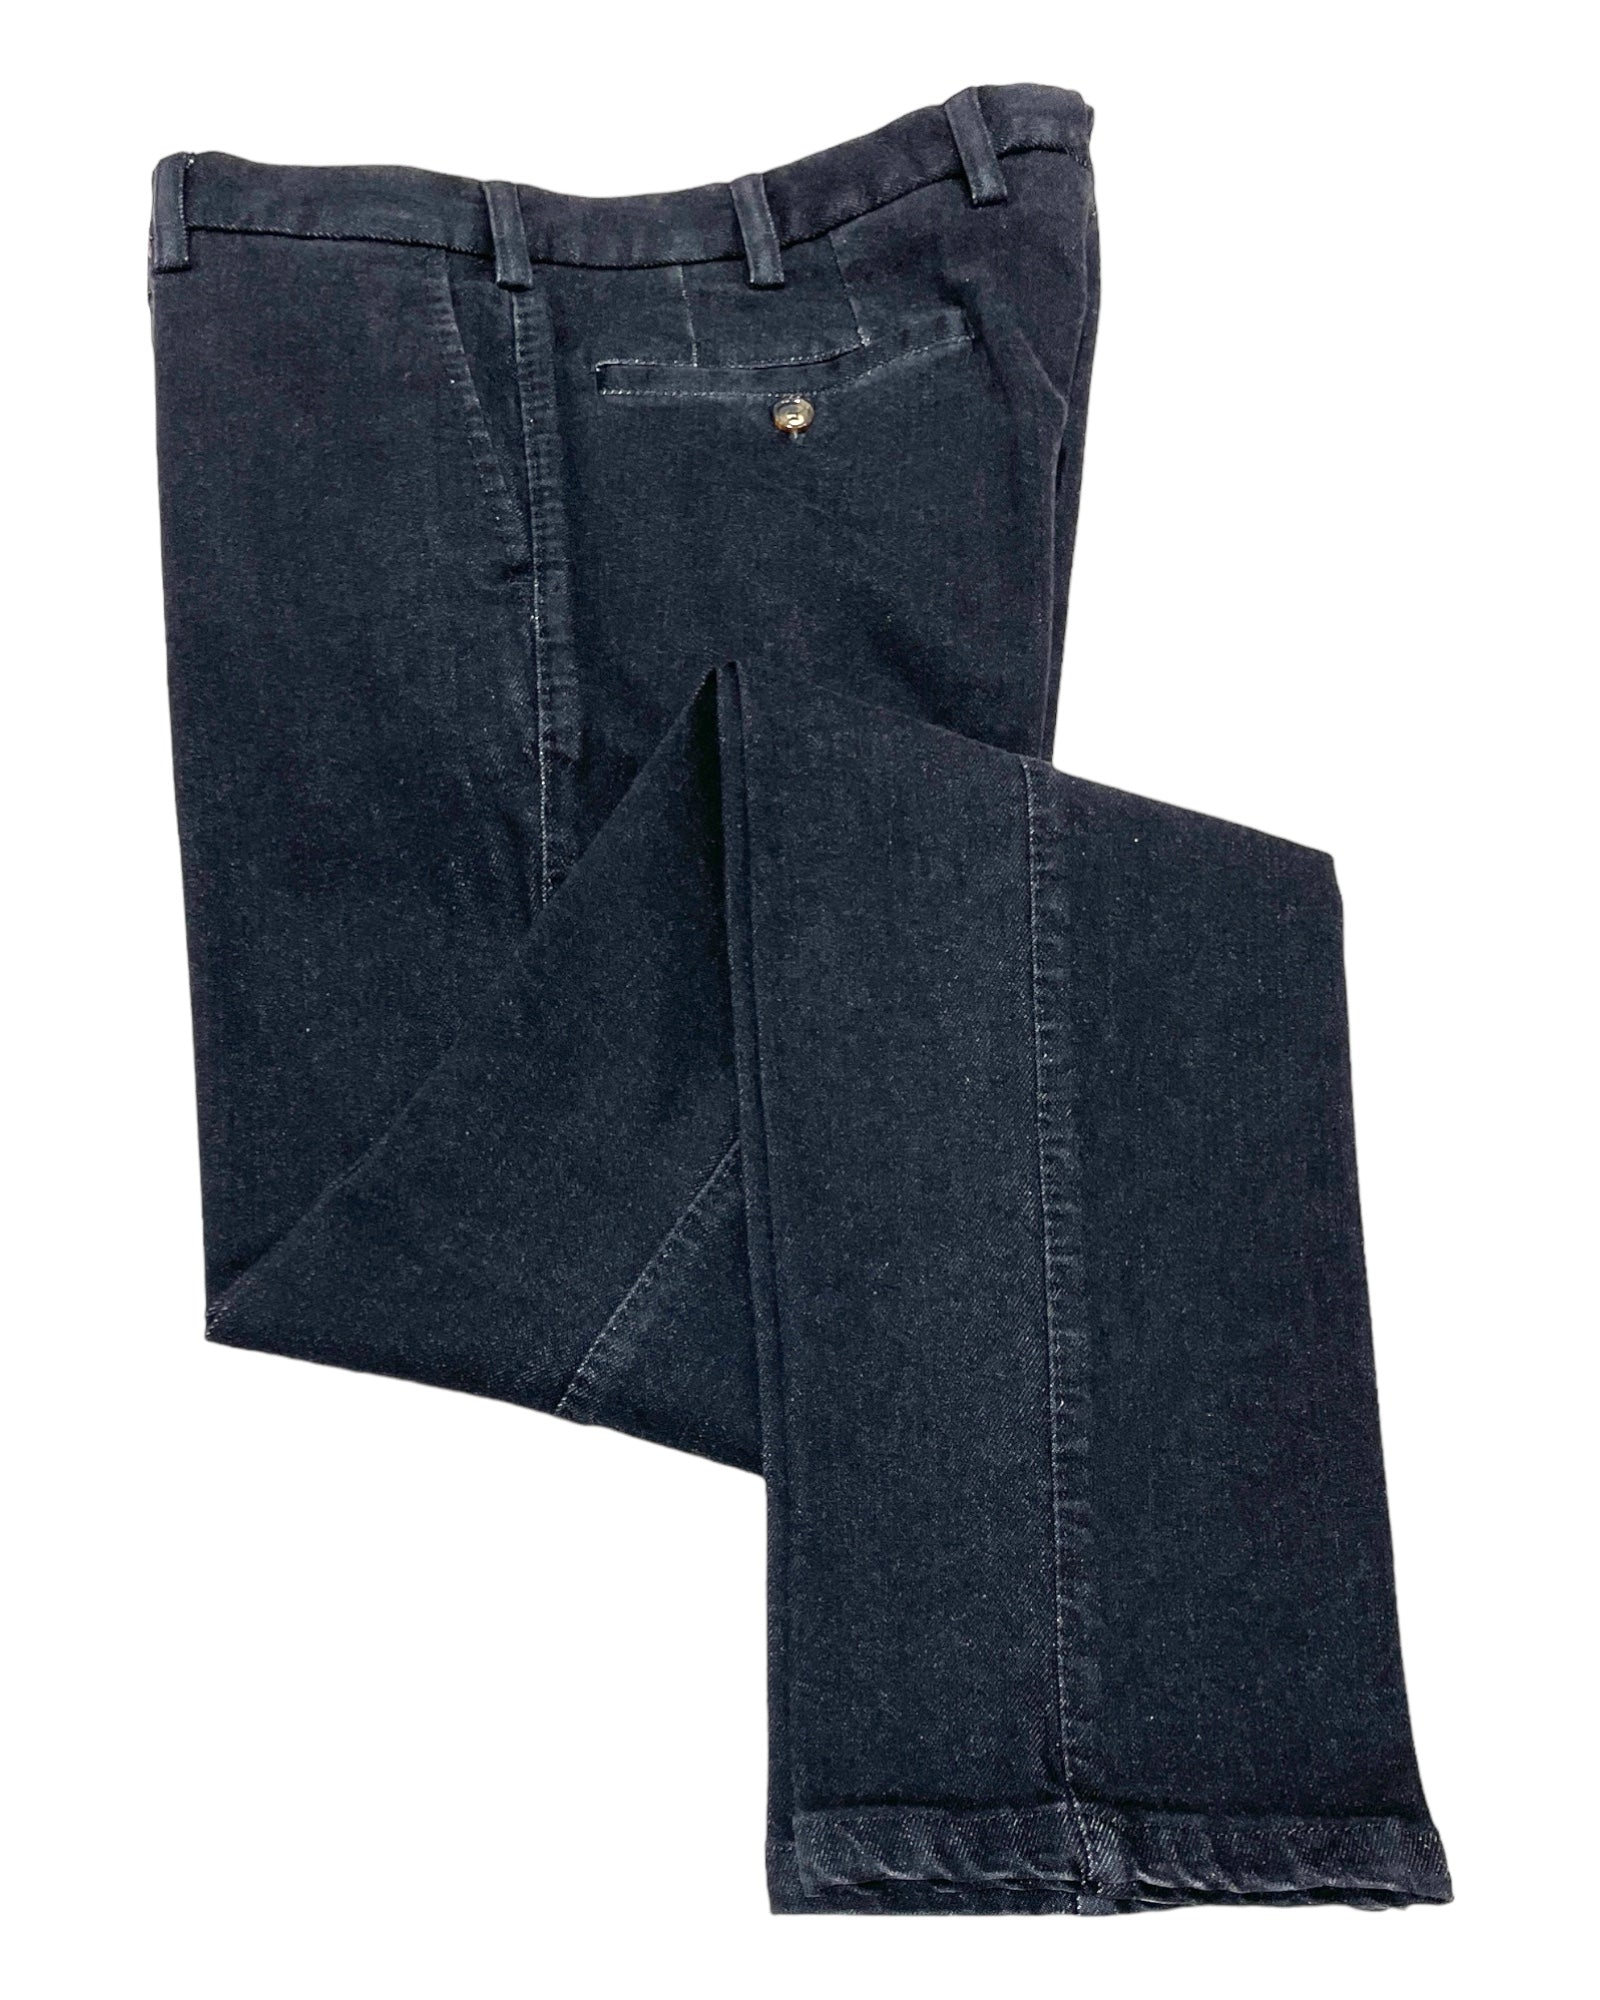 Japanese Denim Pants - Charcoal CASUAL PANTS50